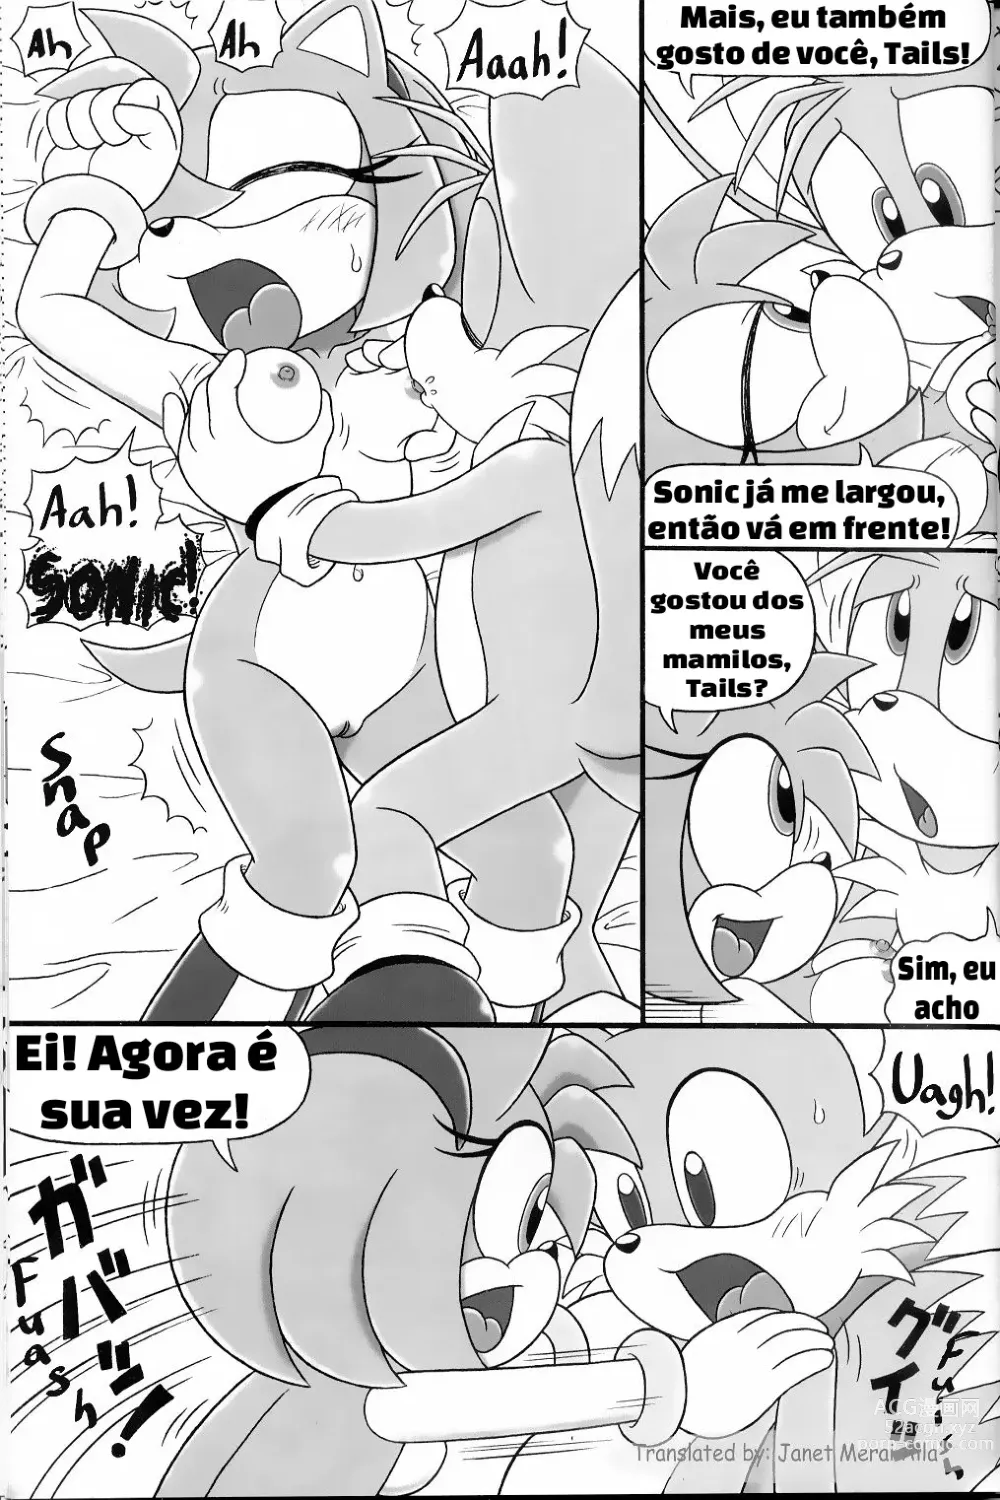 Page 9 of doujinshi Furry BOMB #3